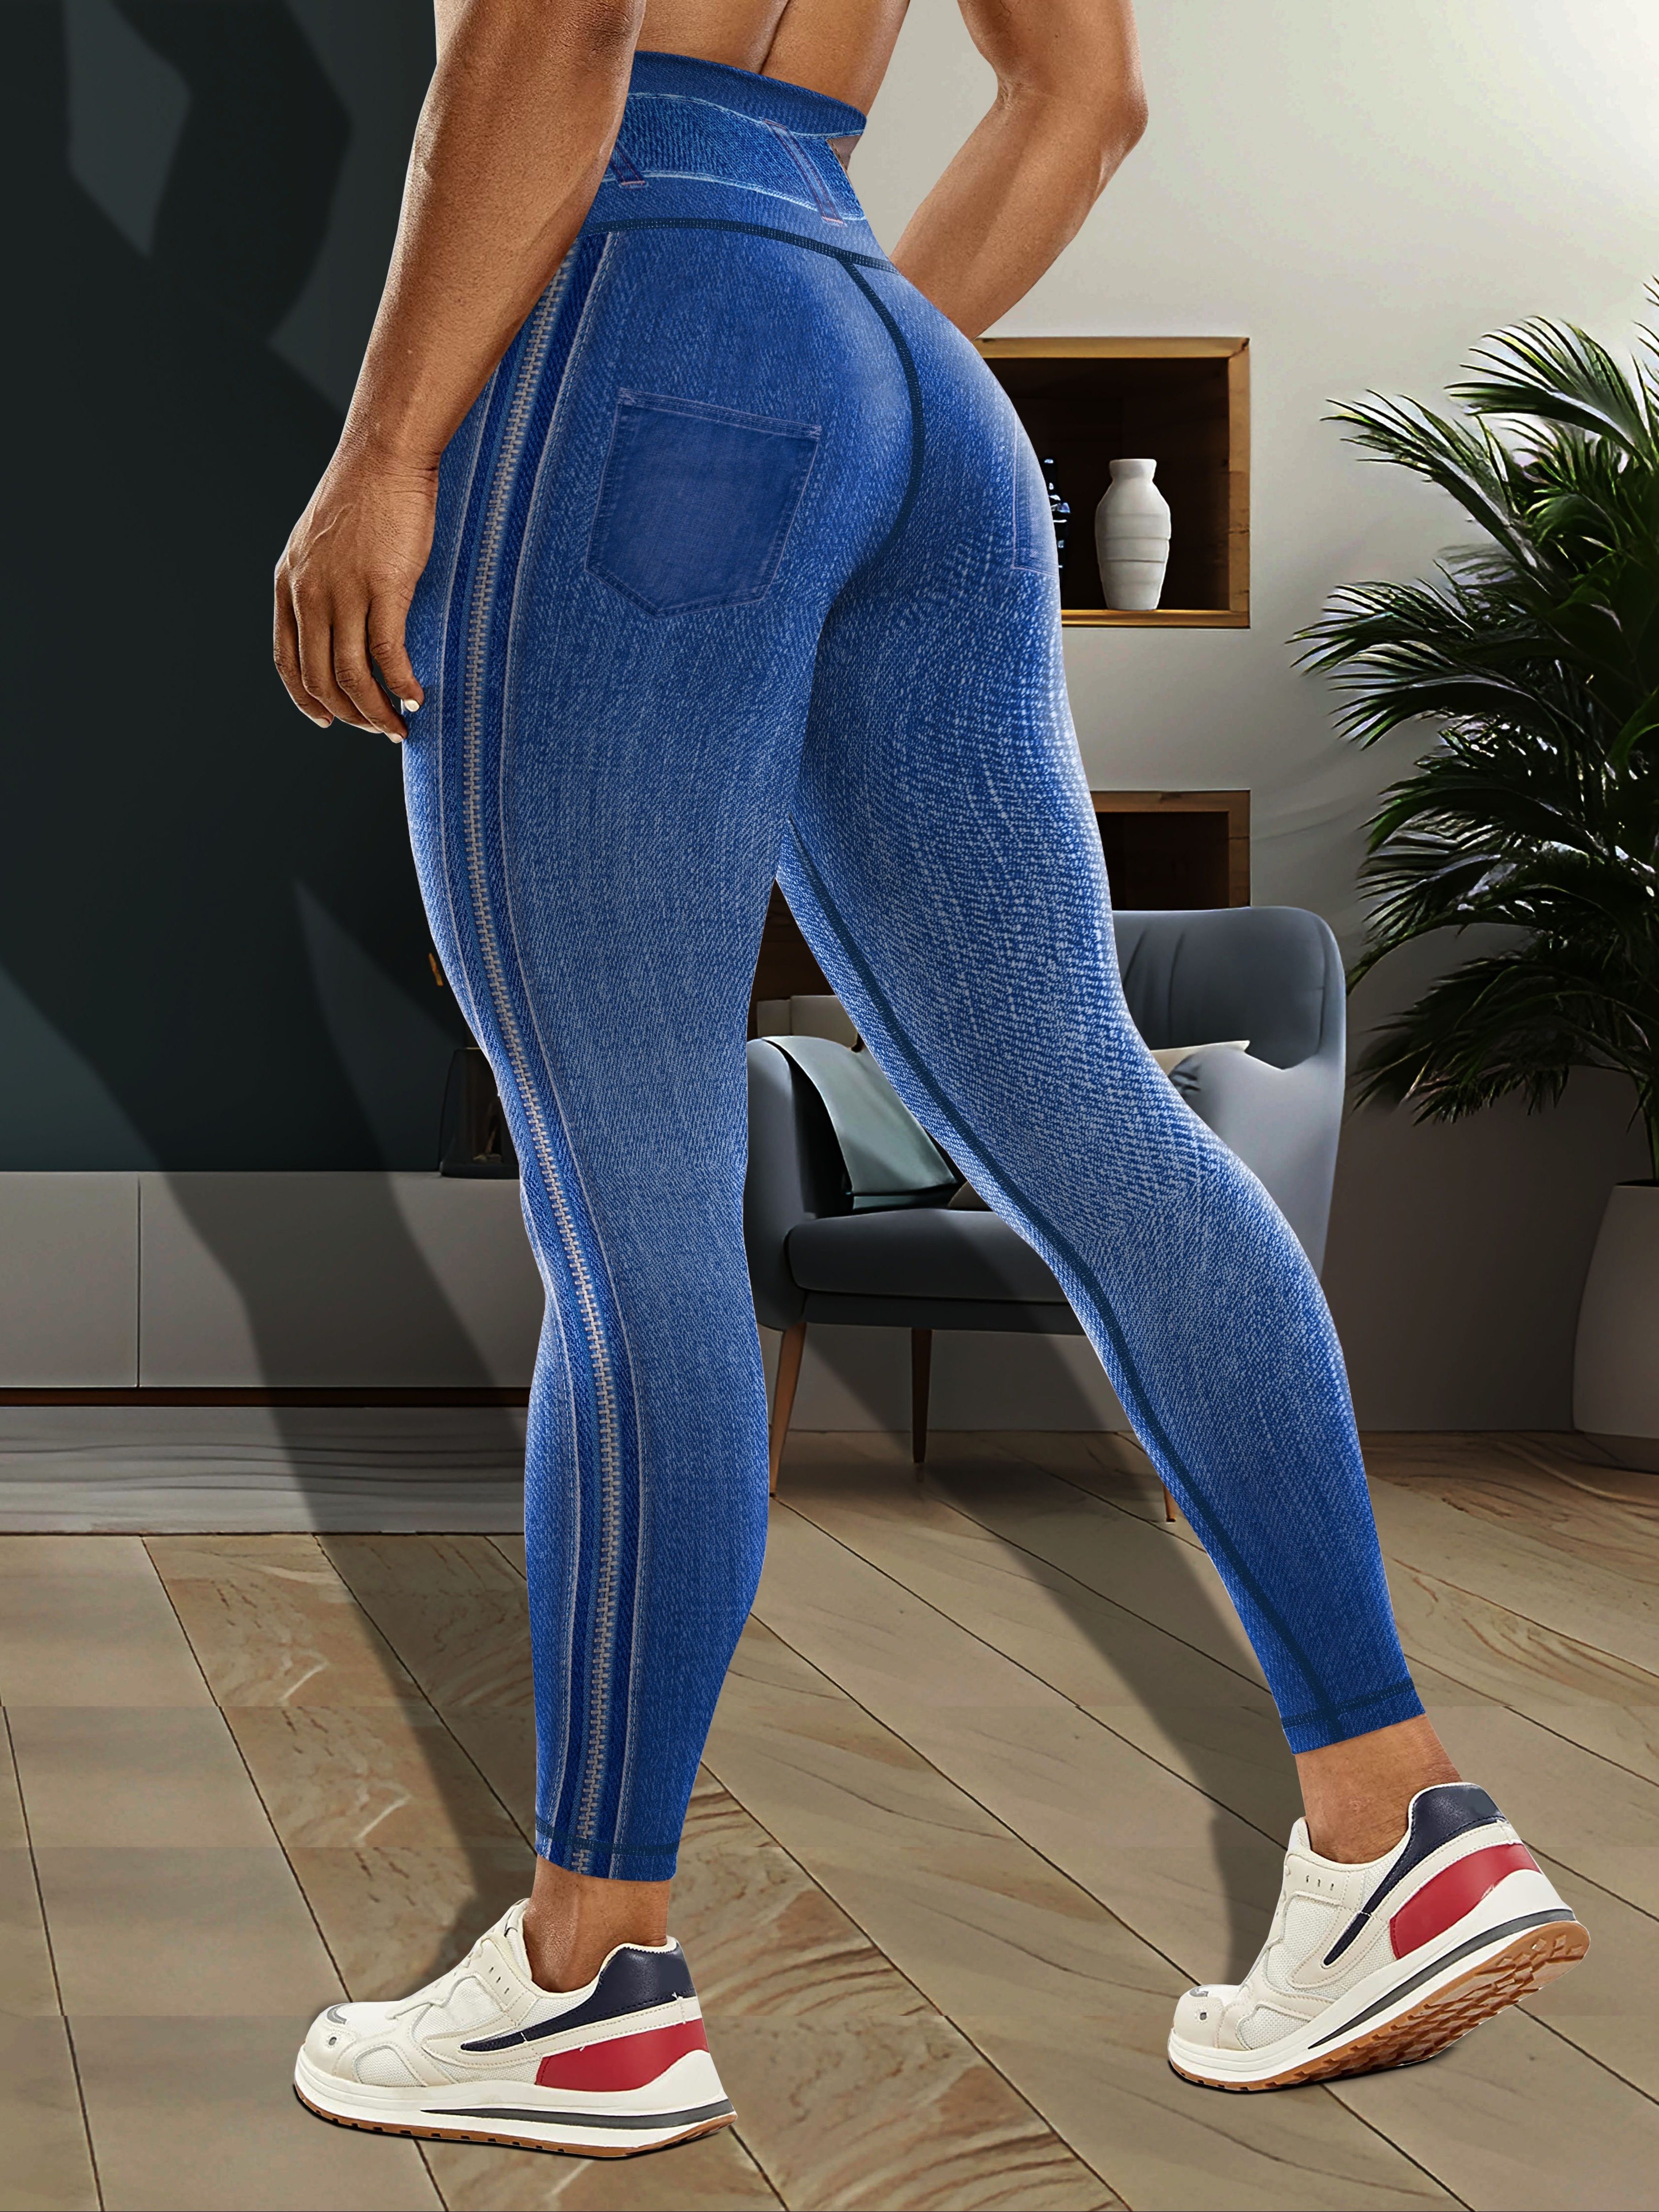 Simulation Jeans Faux Denim Print Yoga Leggings, High Waist Butt Lifting  Tummy Control Sports Tight Pants, Women's Activewear